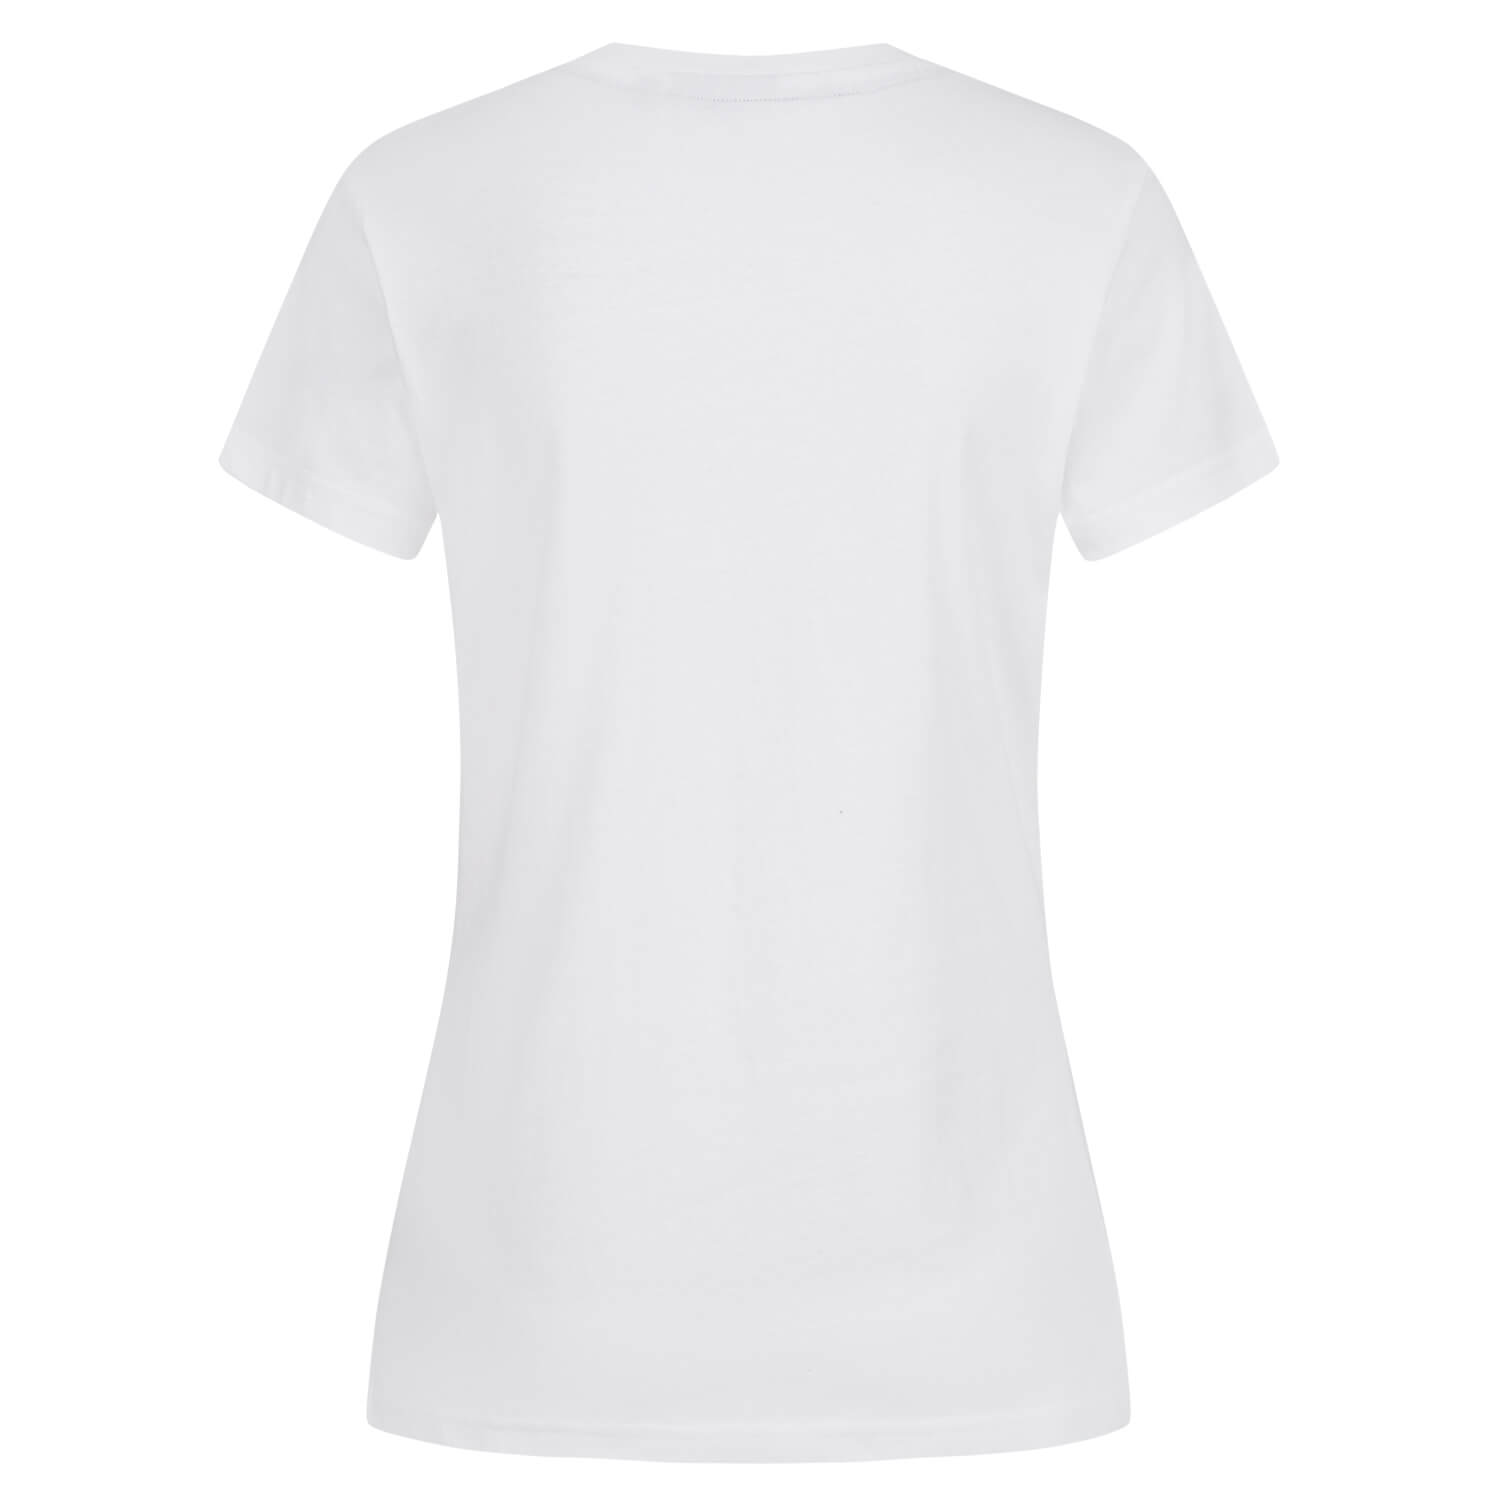 Bild 2: Damen T-Shirt White Badge